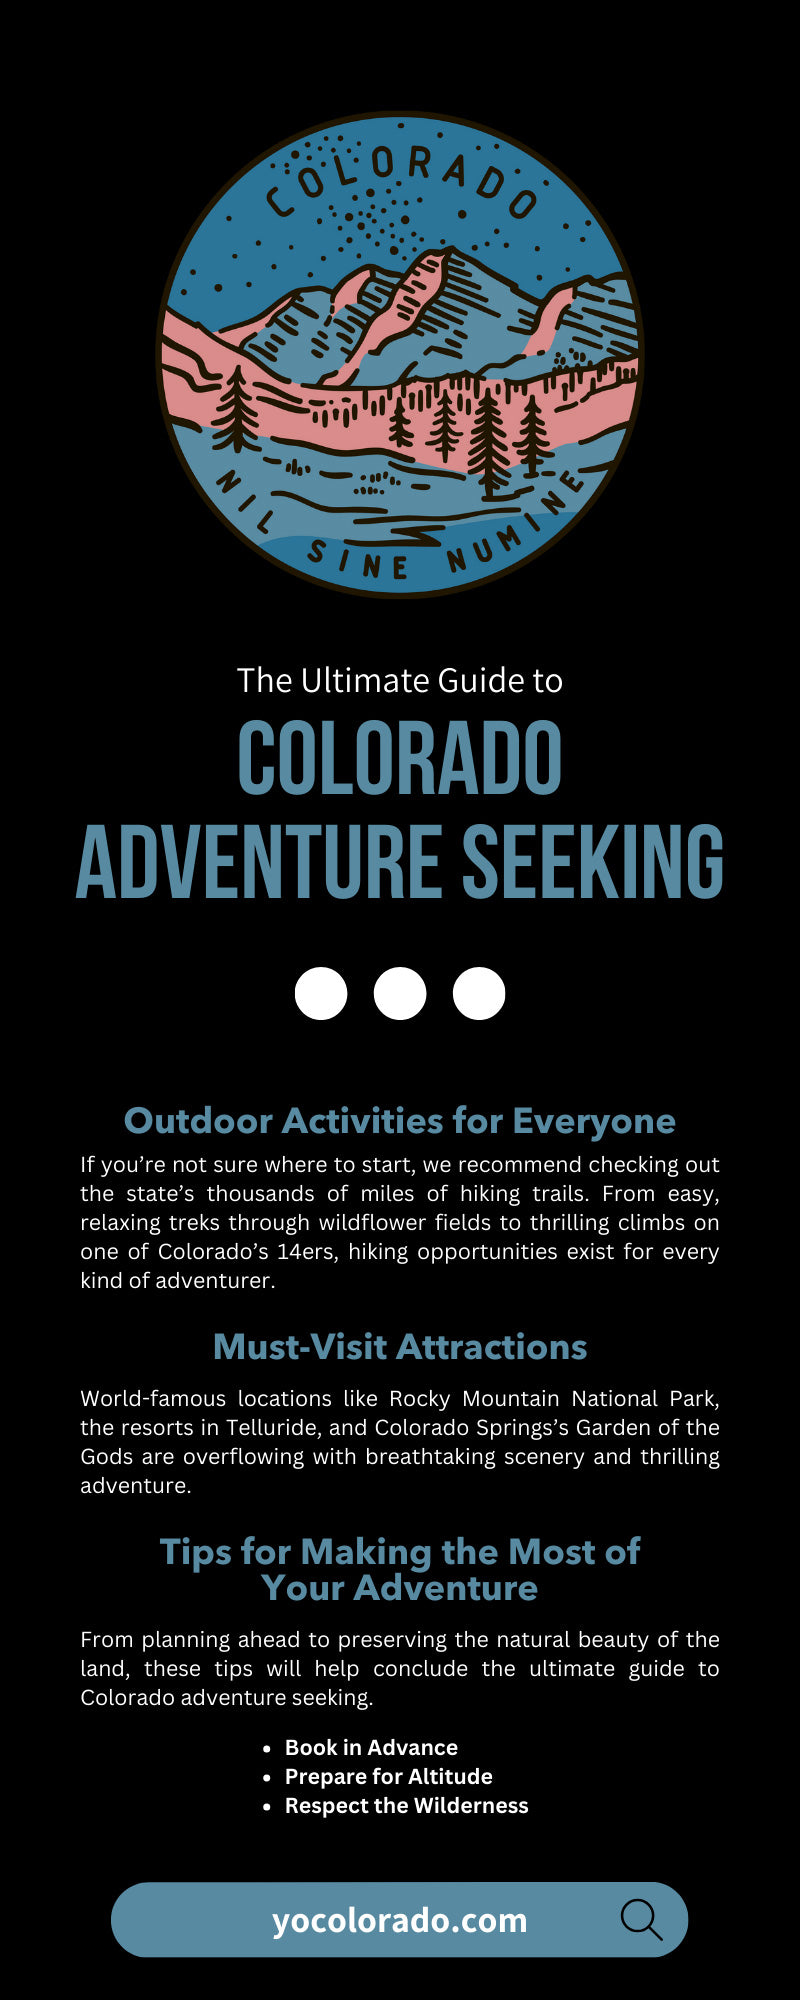 The Ultimate Guide to Colorado Adventure Seeking